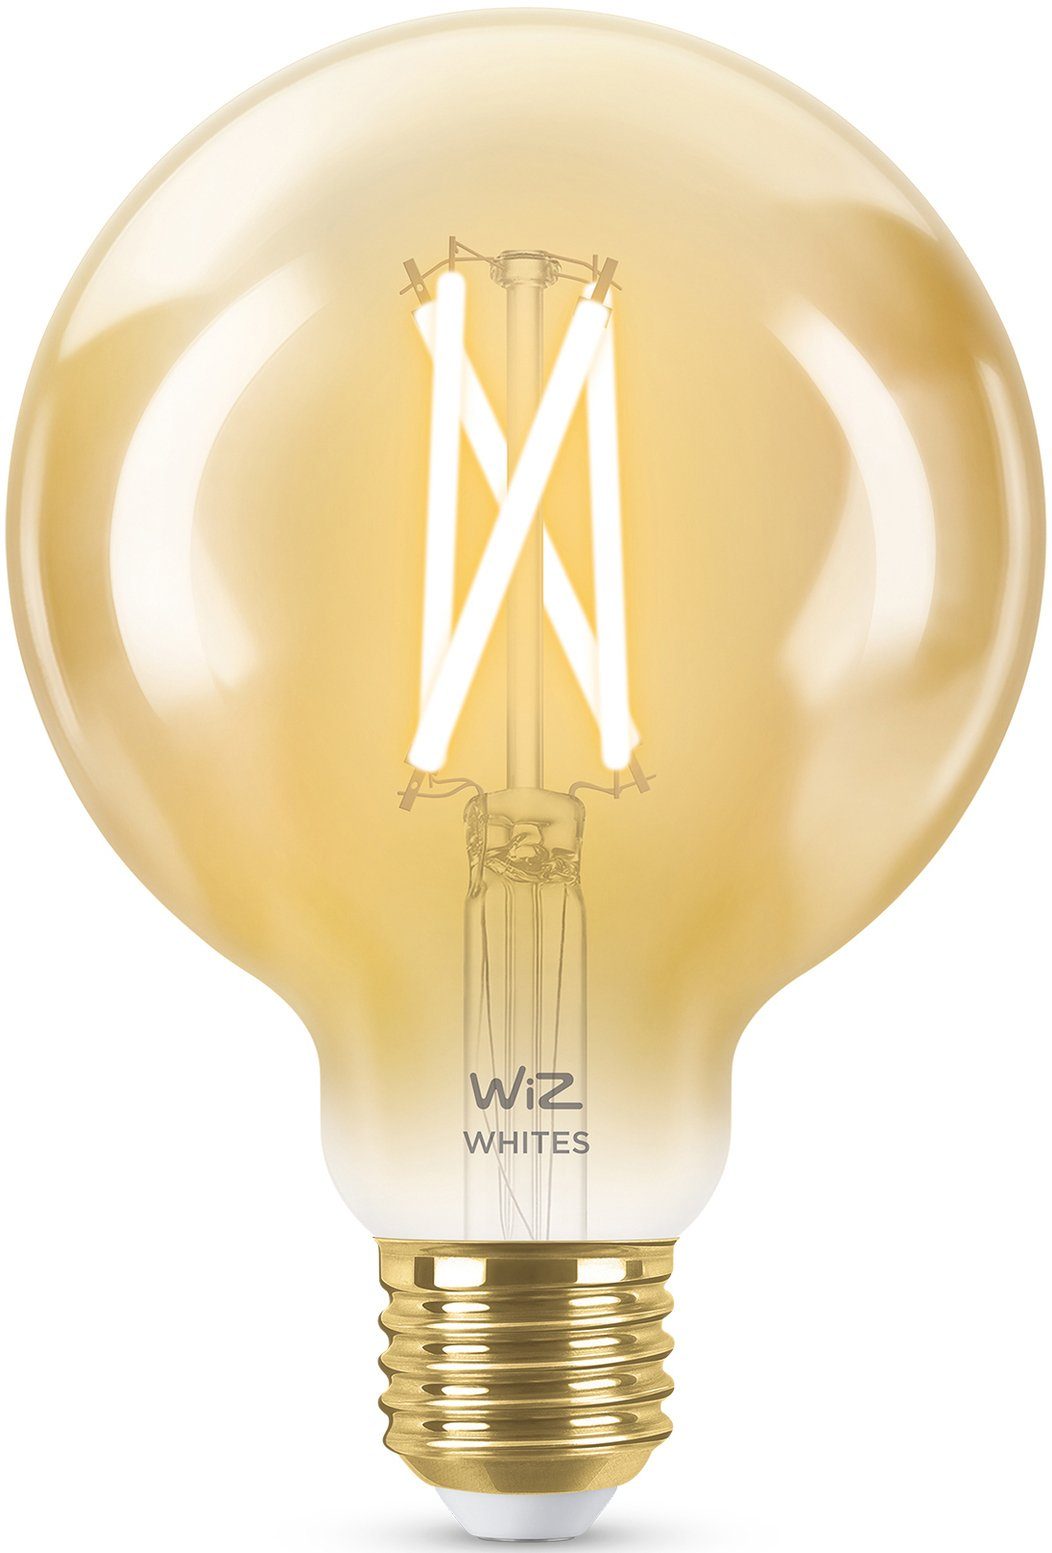 Vintage-Design 1 E27, Wiz LED E27 50W G95 Amber LED-Filament St., Filament Warmweiß, Filament für Lampen Globeform klassisches White Einzelpack, Tunable WiZ